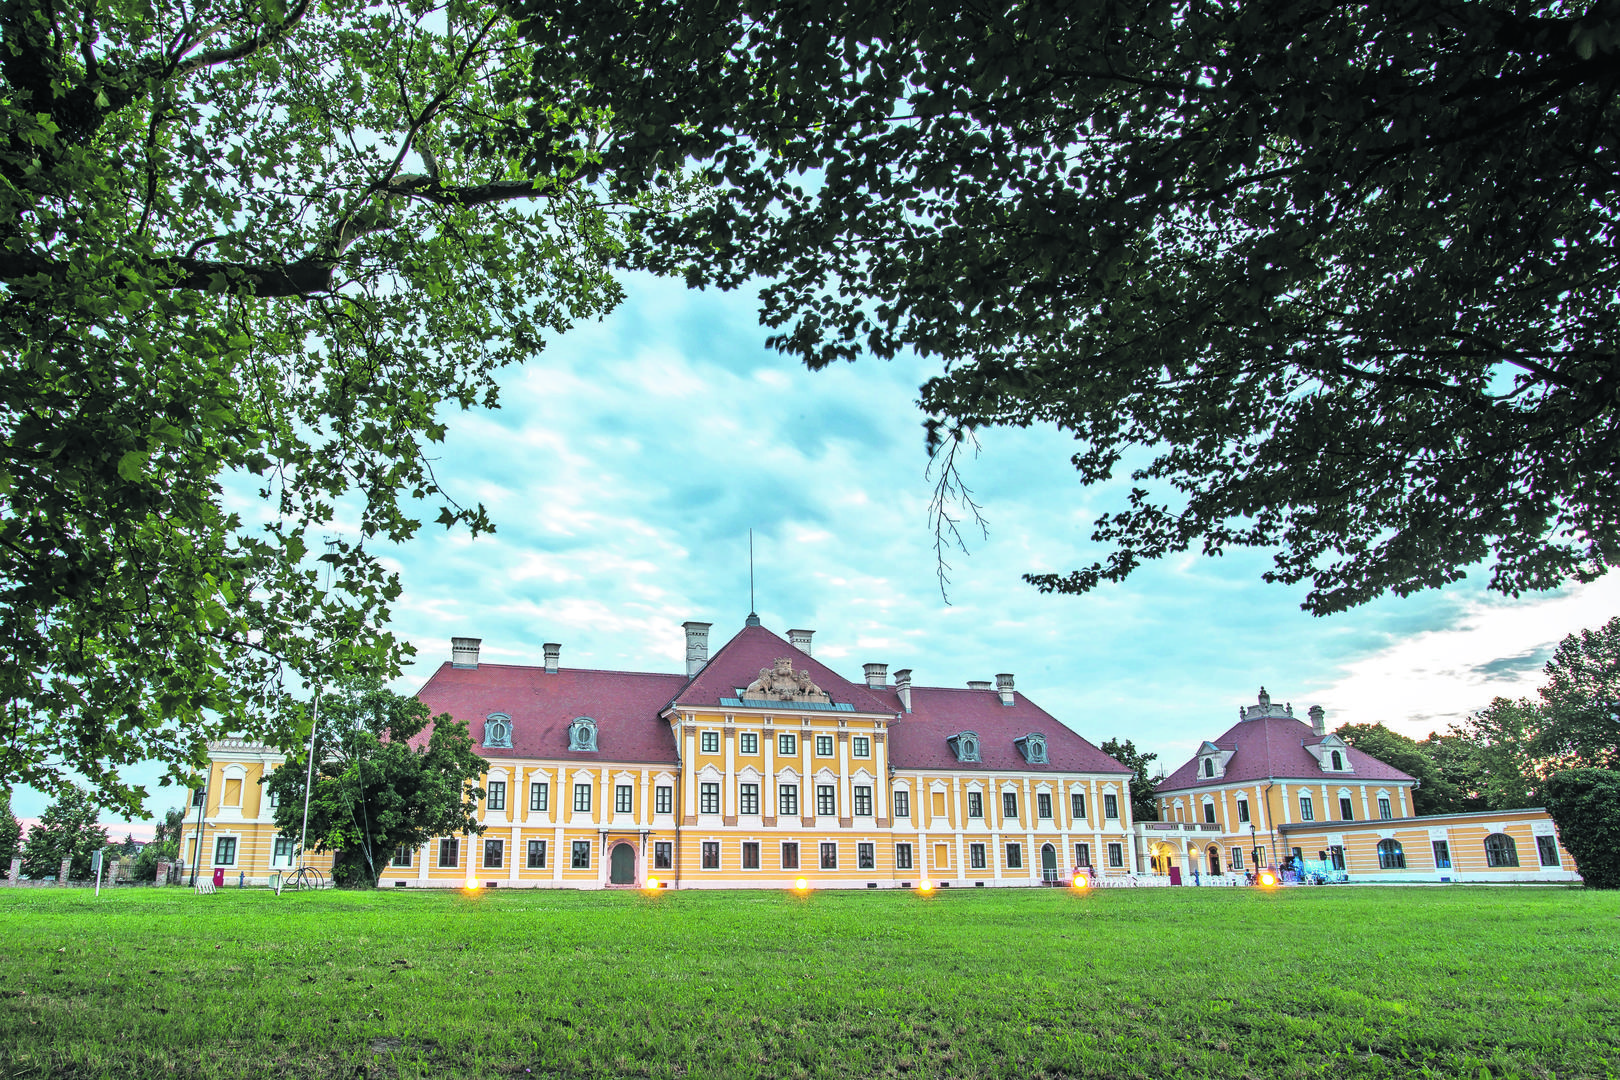 Dvorac Eltz barokni je dvorac
smješten na obali Dunava u 
gradu Vukovaru